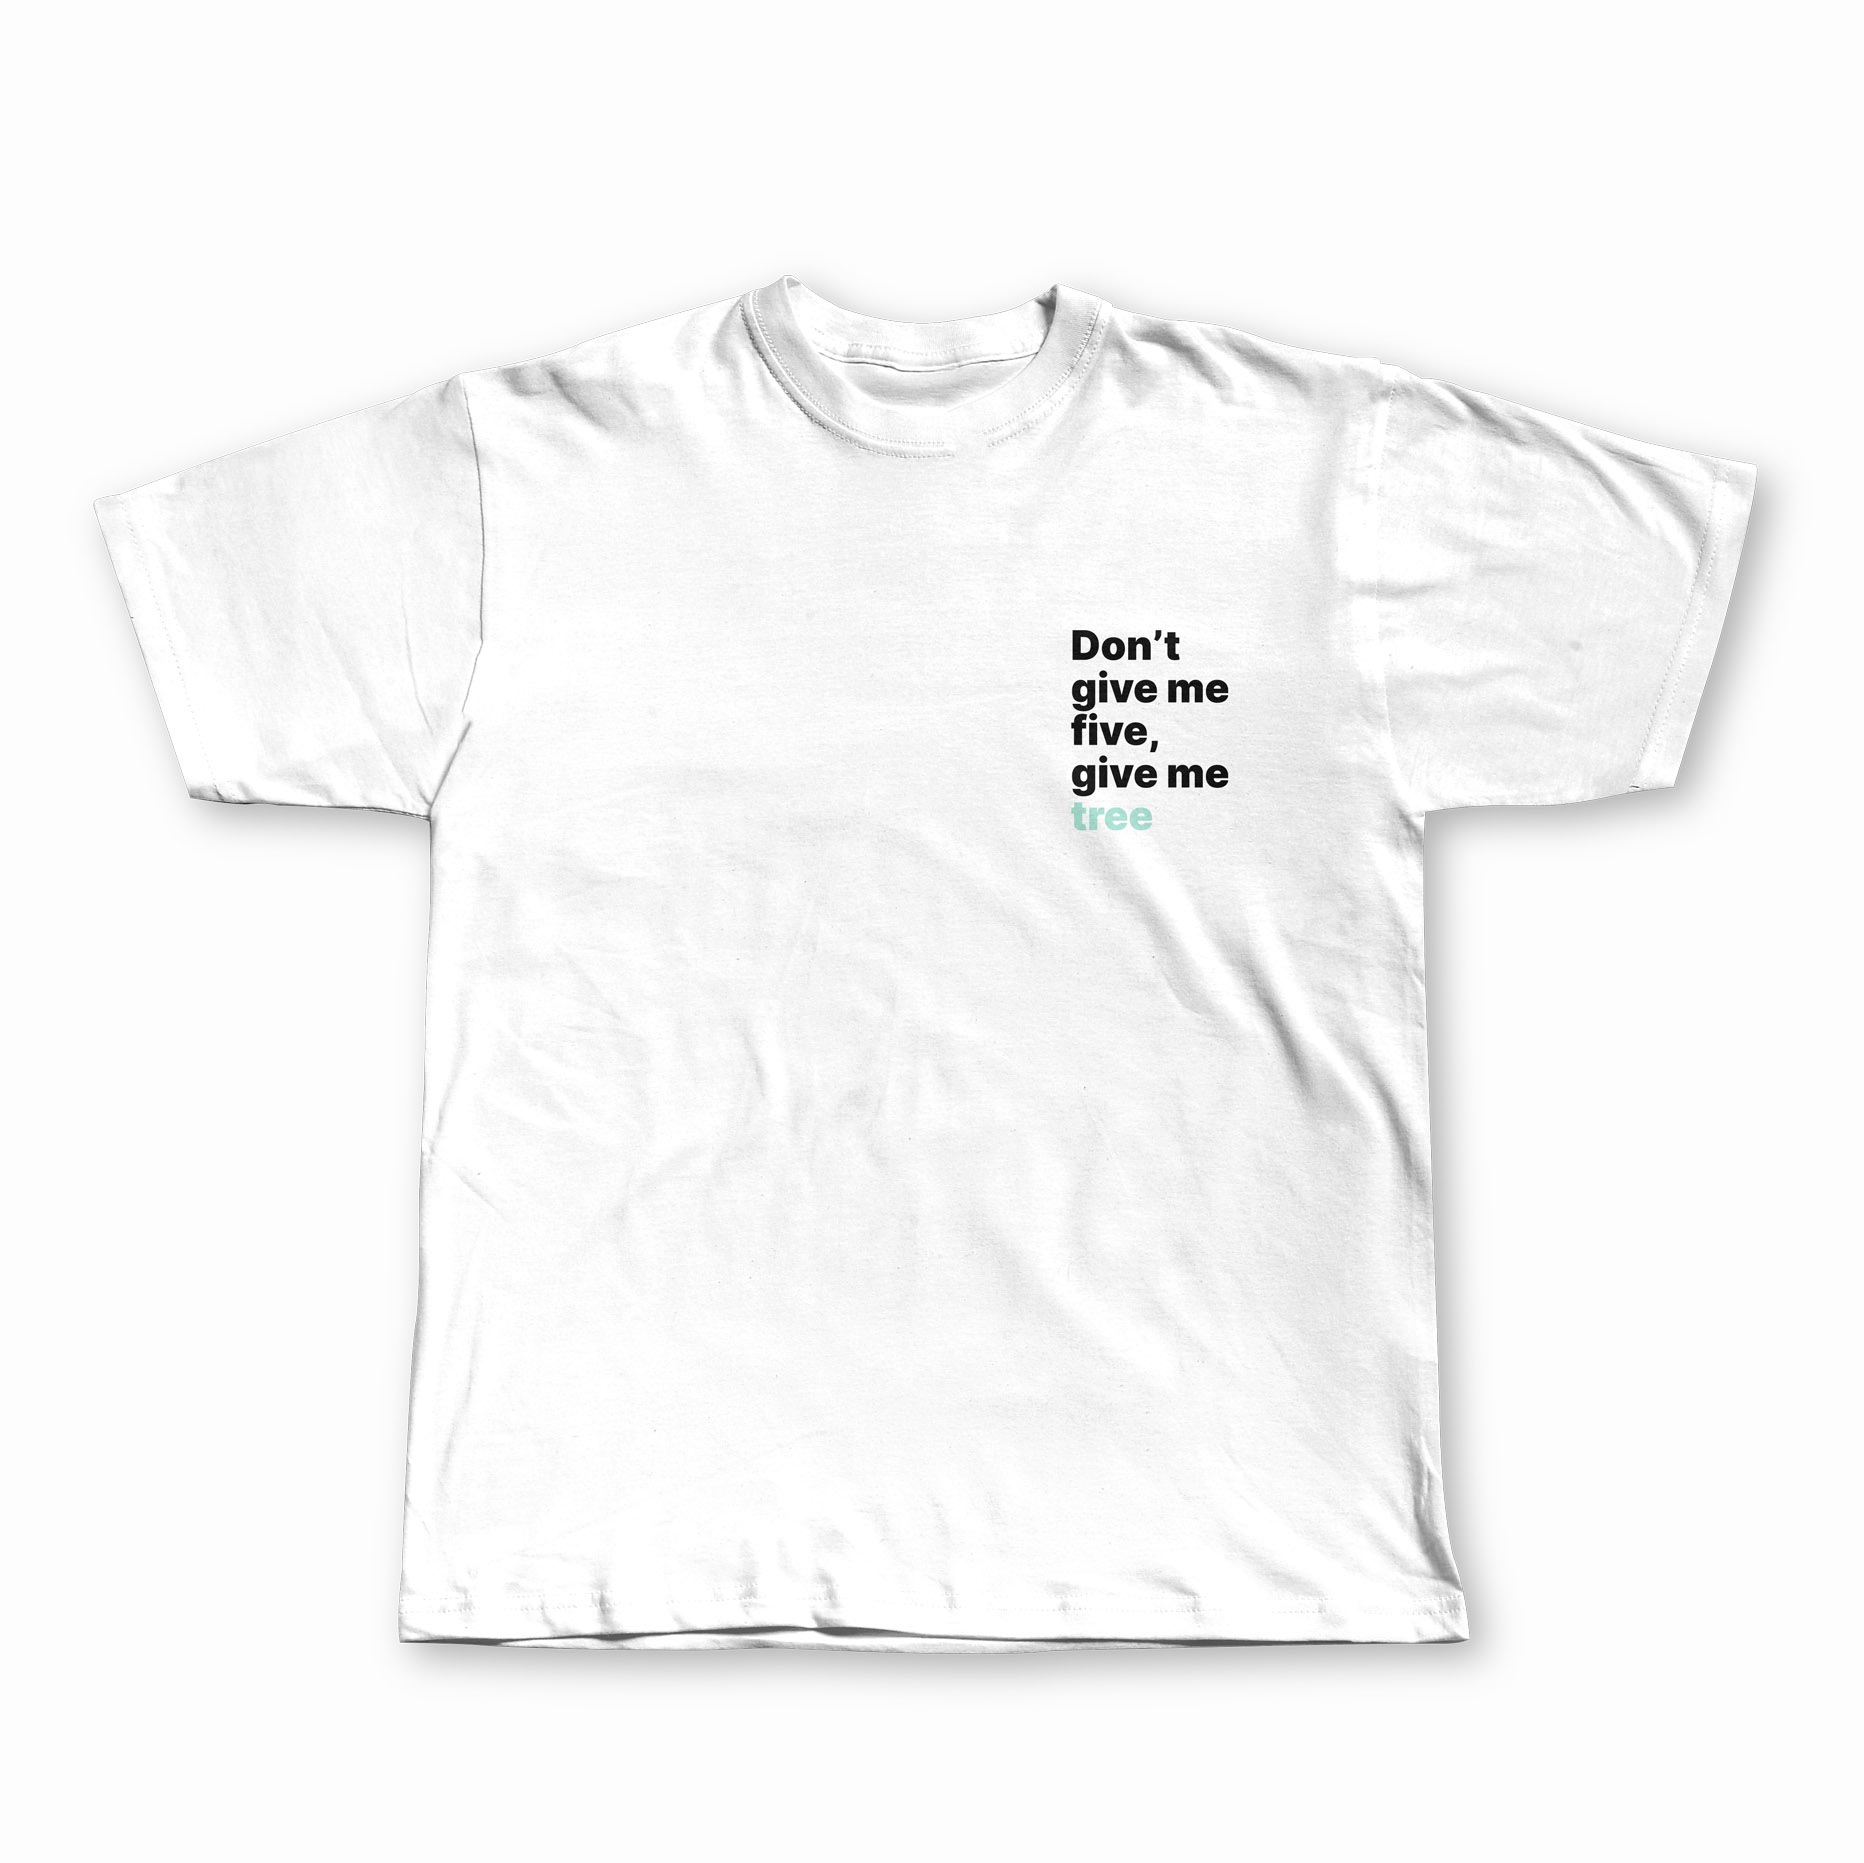 Camiseta algodon organico naletrae Give me tree - delantera